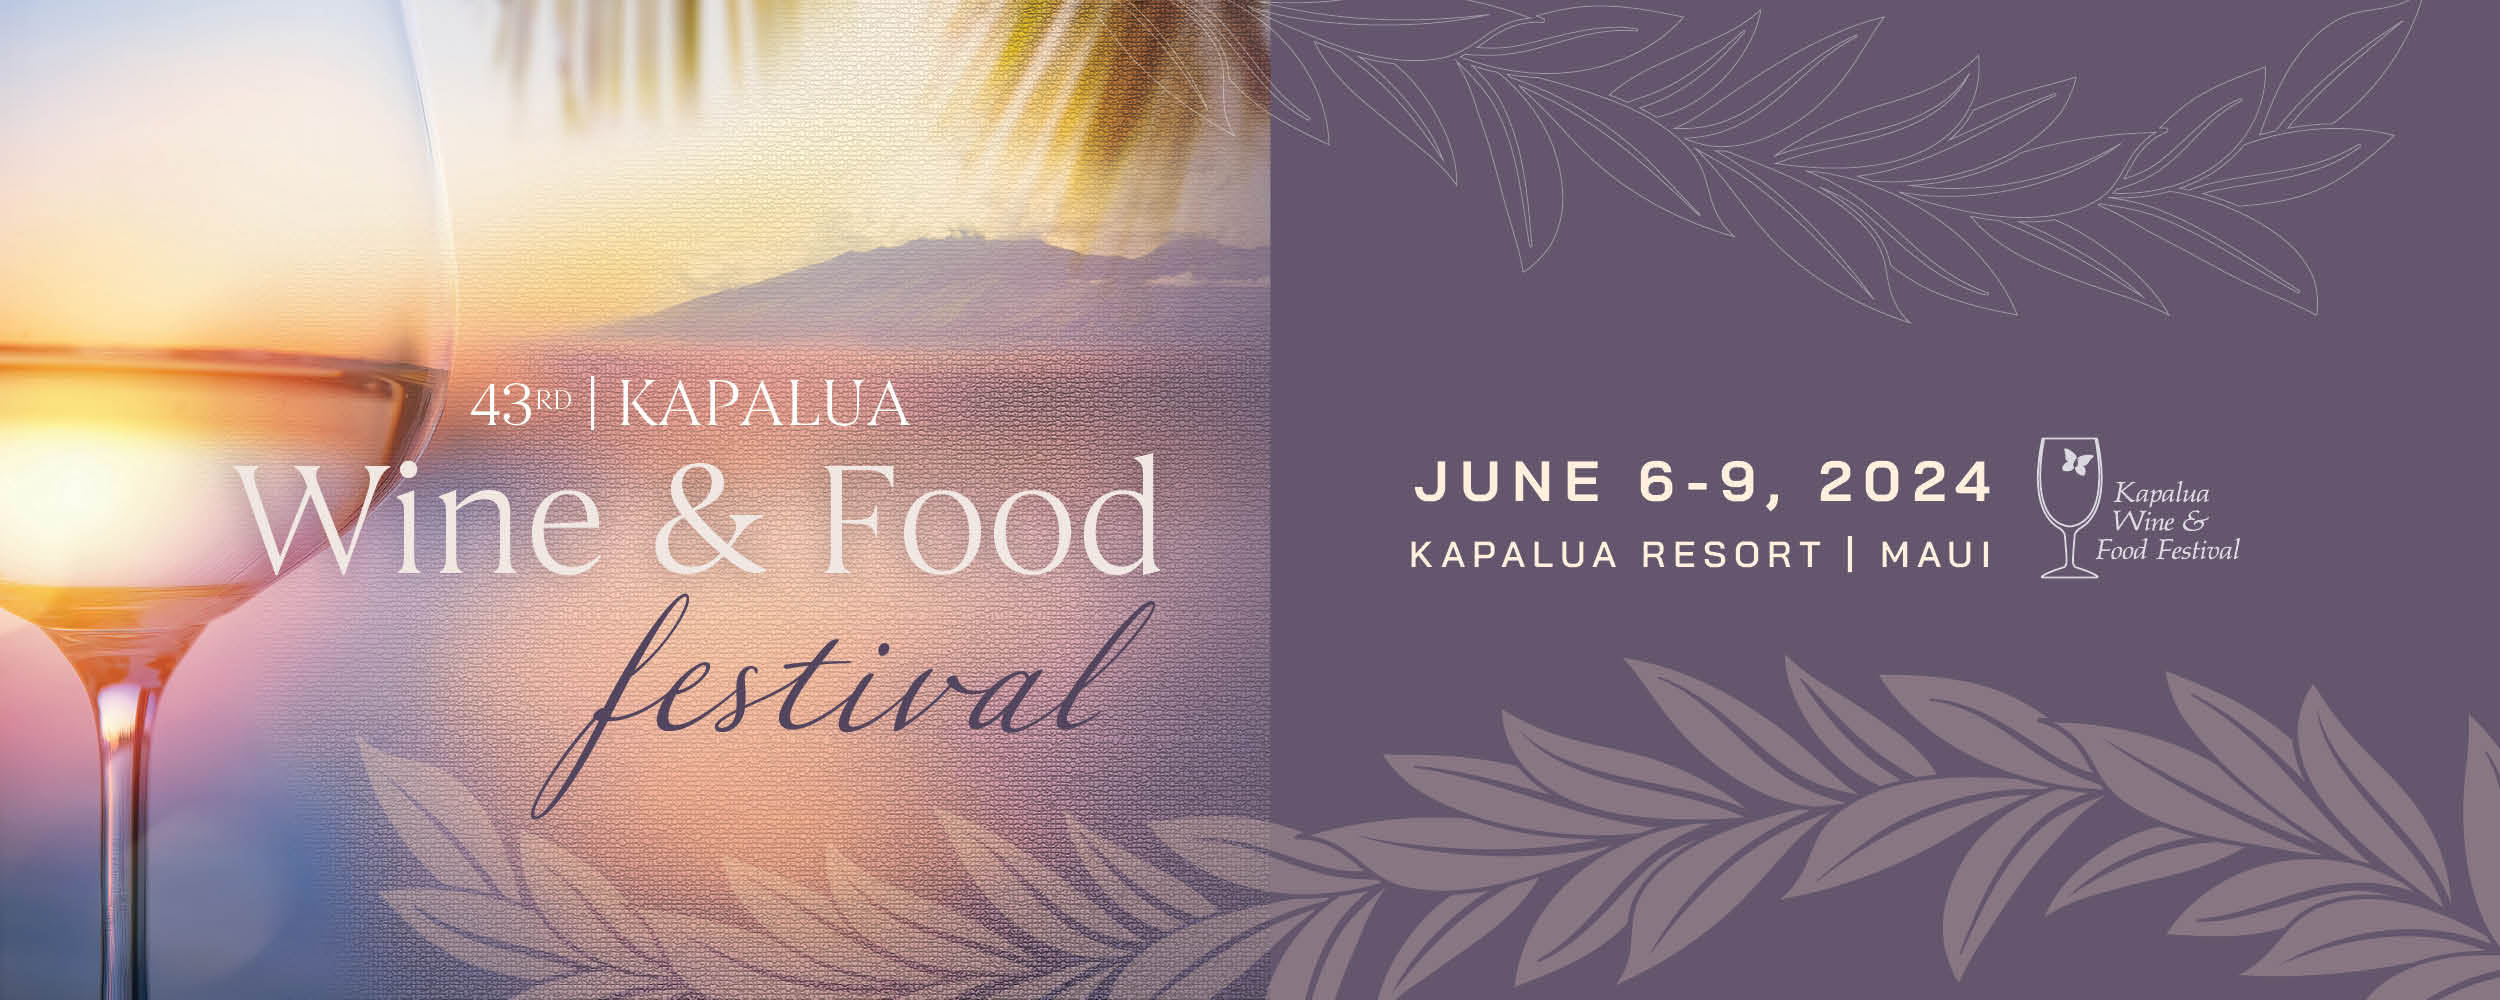 Kapalua Wine and Food Festival 2024